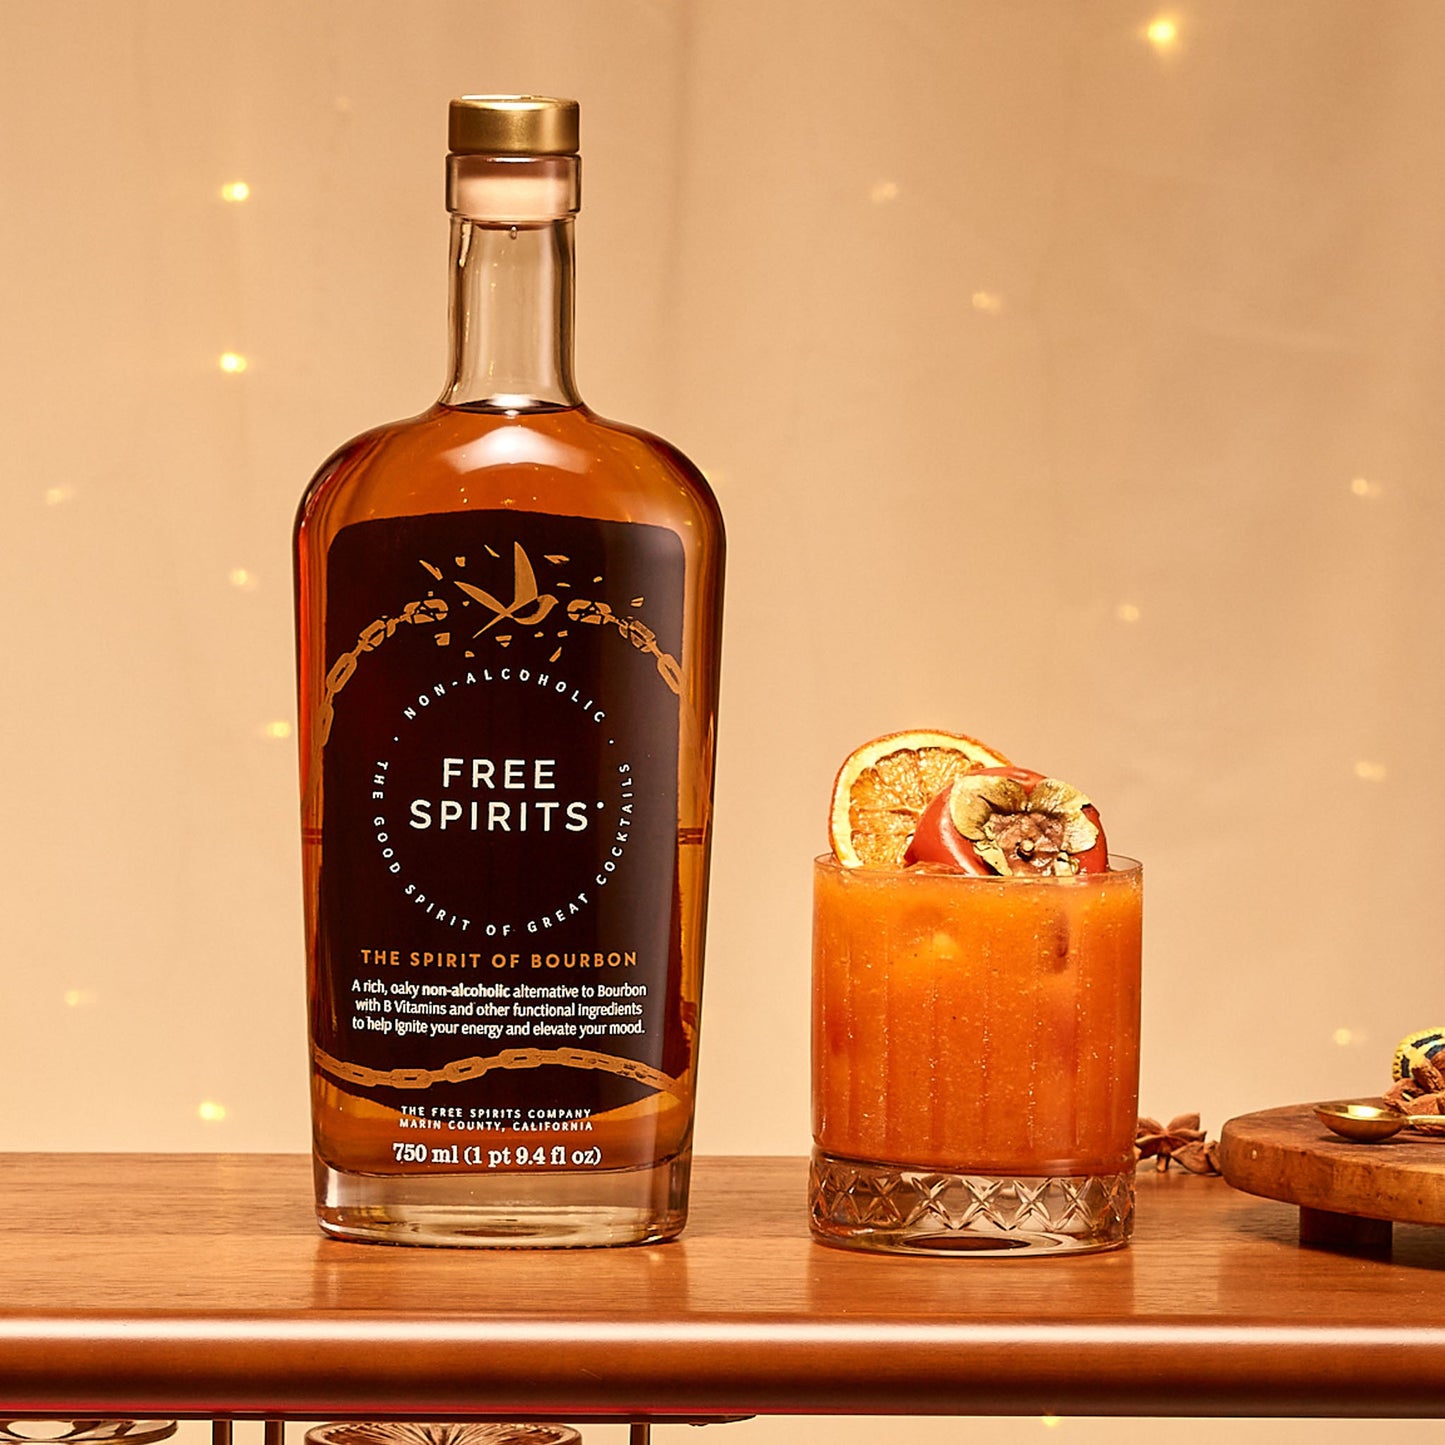 The Free Spirits Company - The Spirit of Bourbon